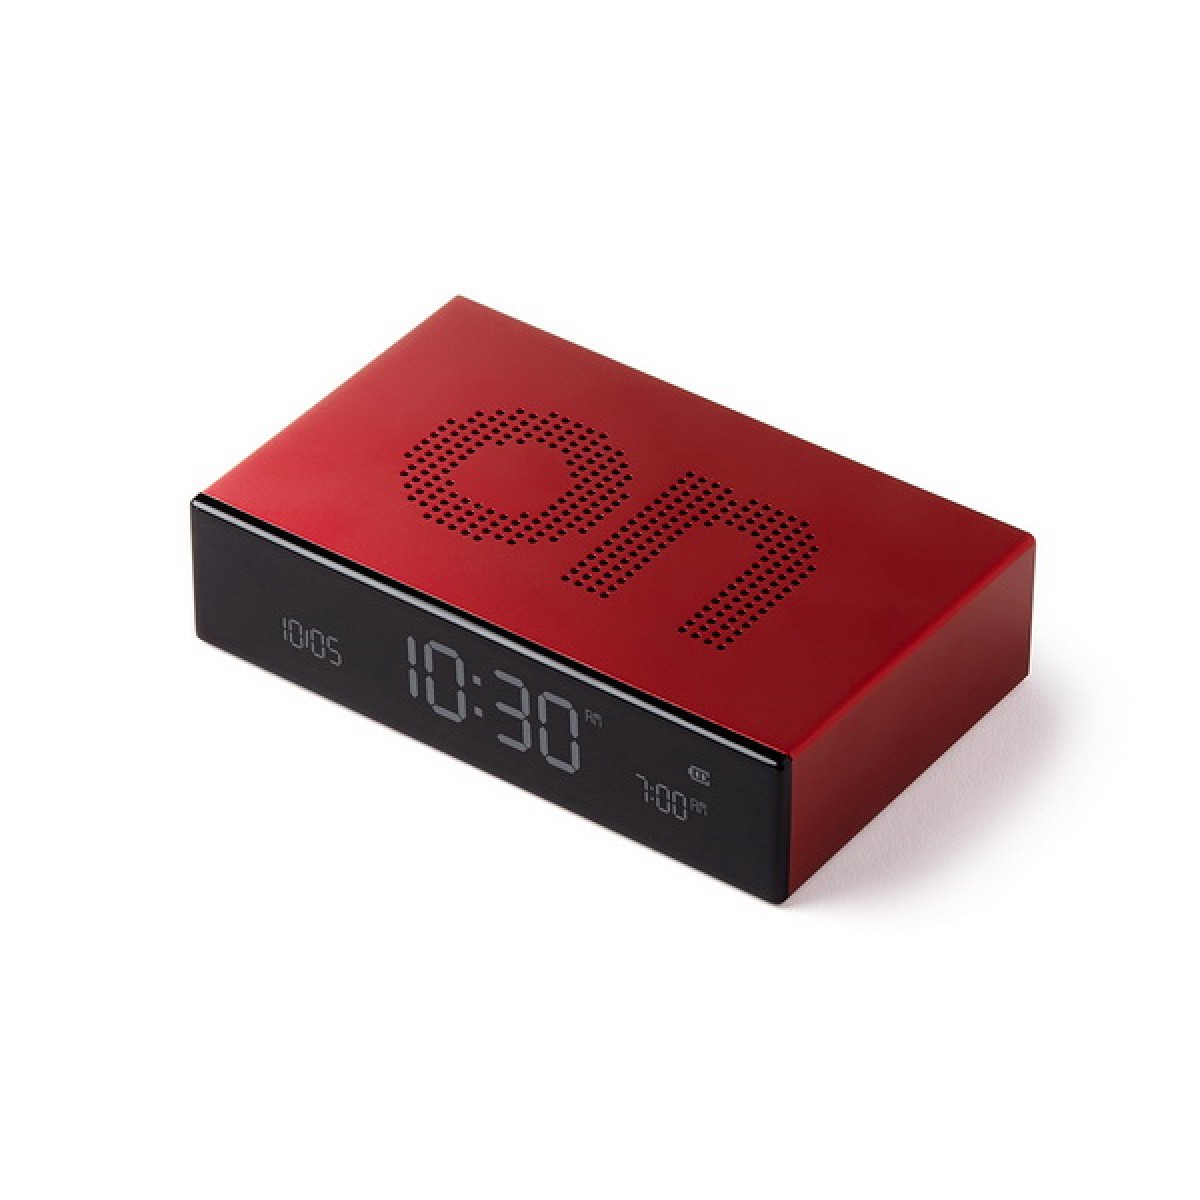 Lexon - Flip Premium - Reversible LCD alarm clock - Red